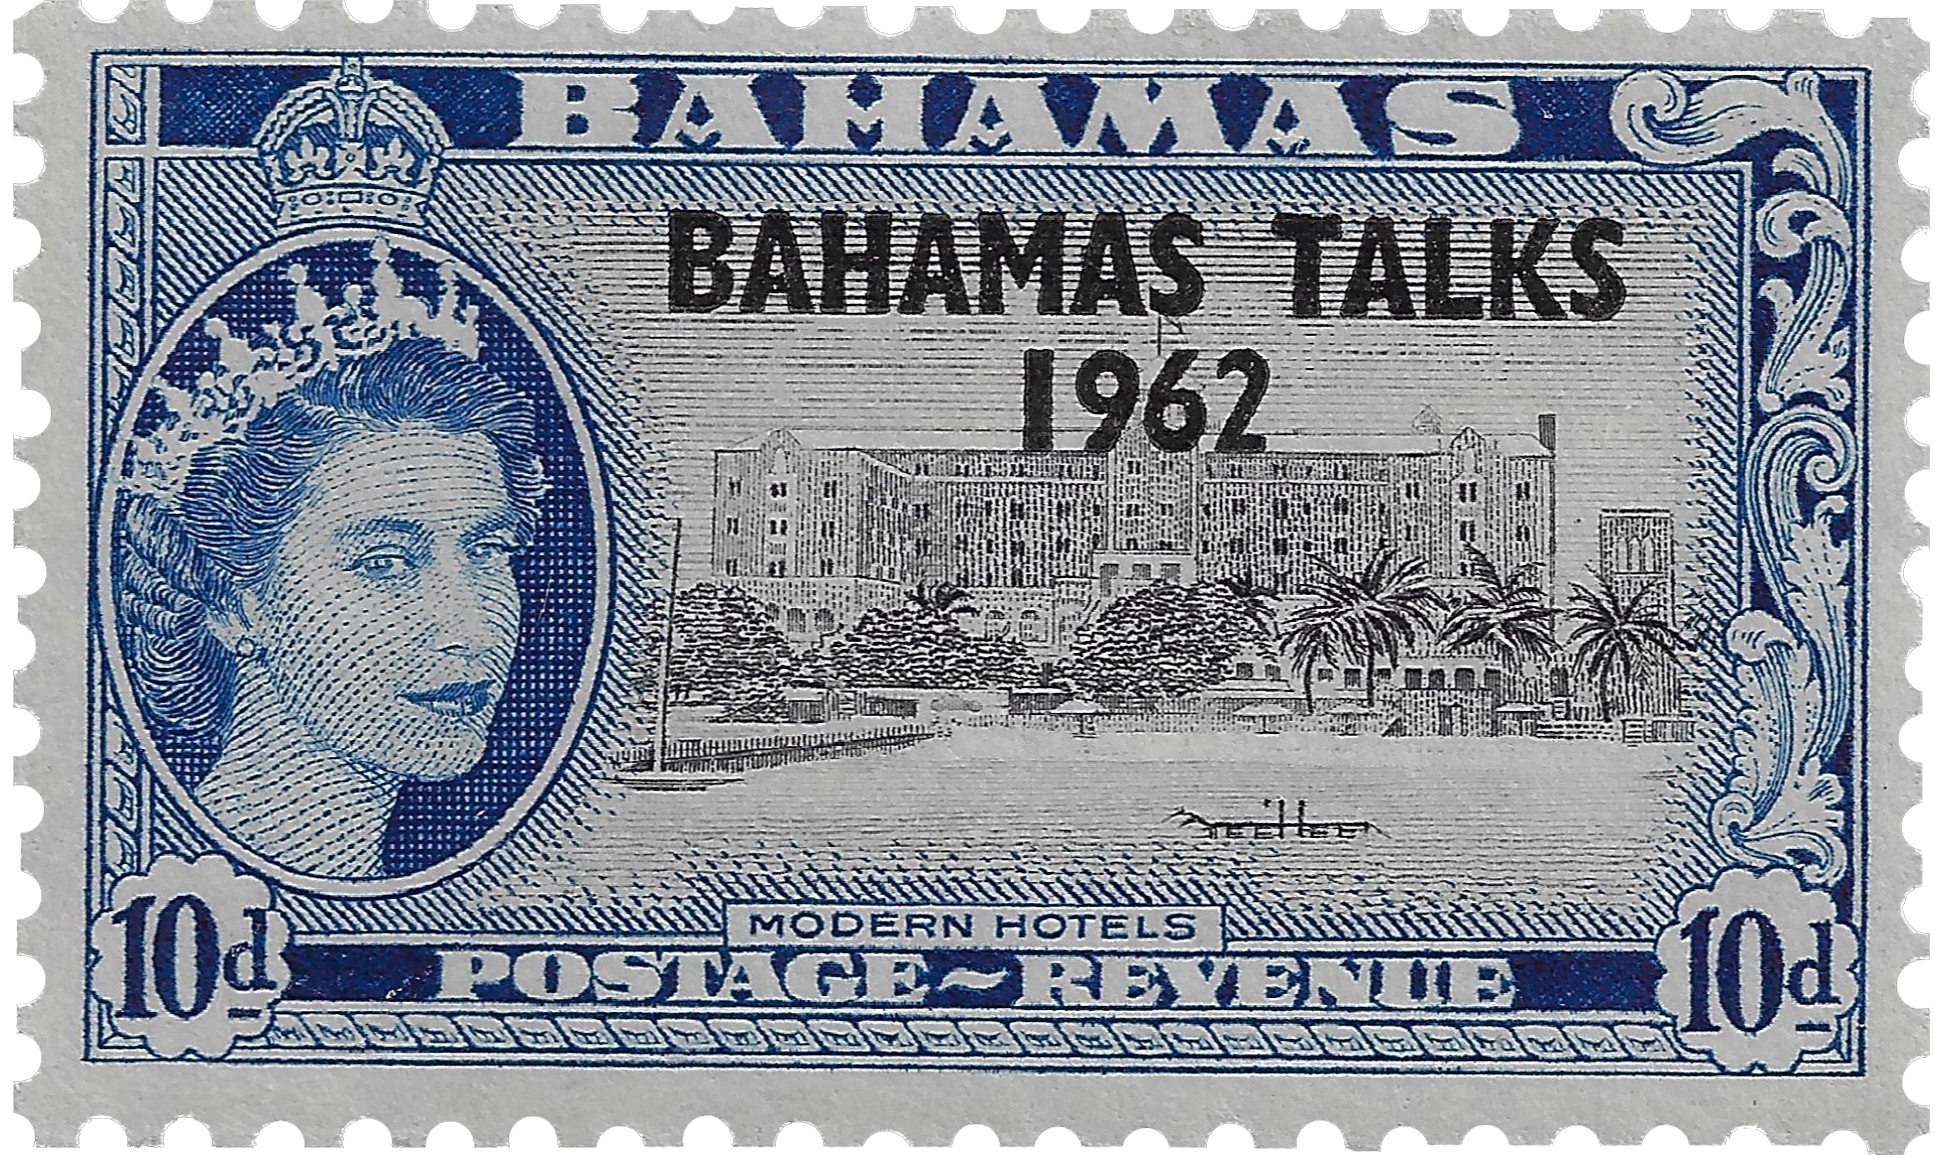 10d 1963, Modern Hotels, Bahamas Talks